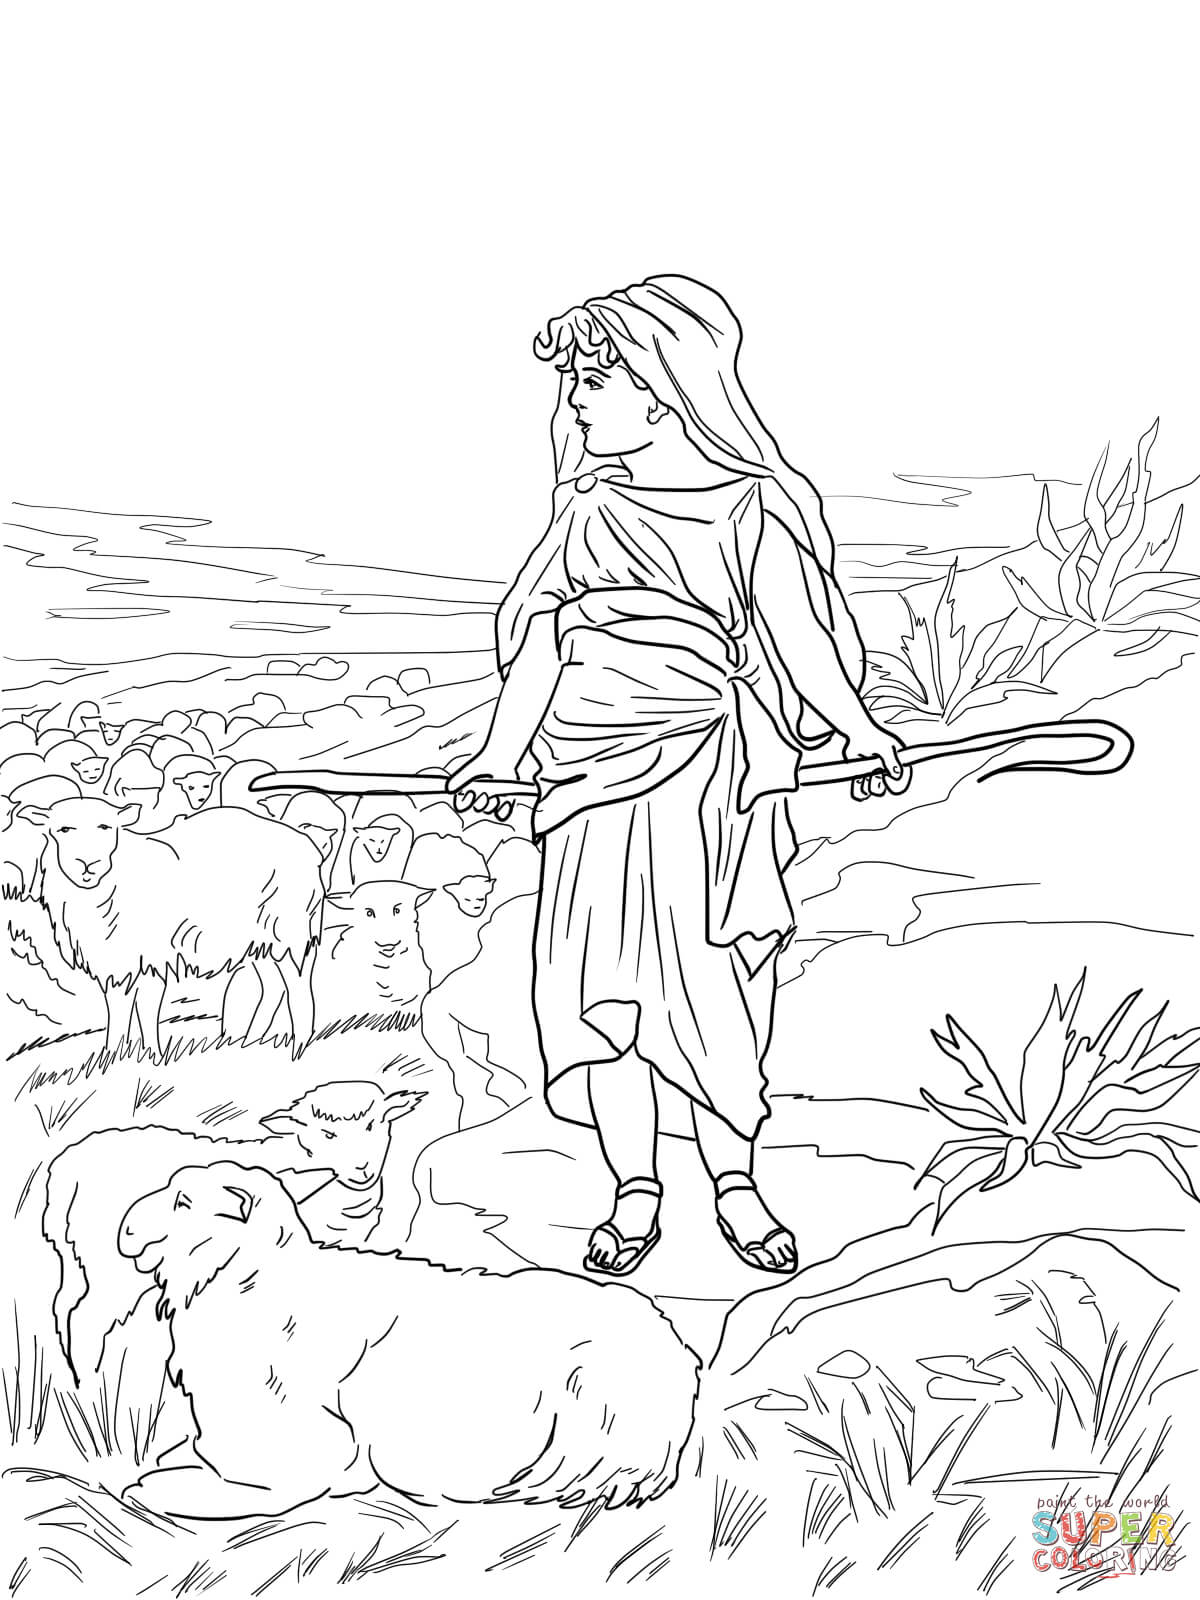 Shepherd Coloring Page at GetColorings.com | Free printable colorings